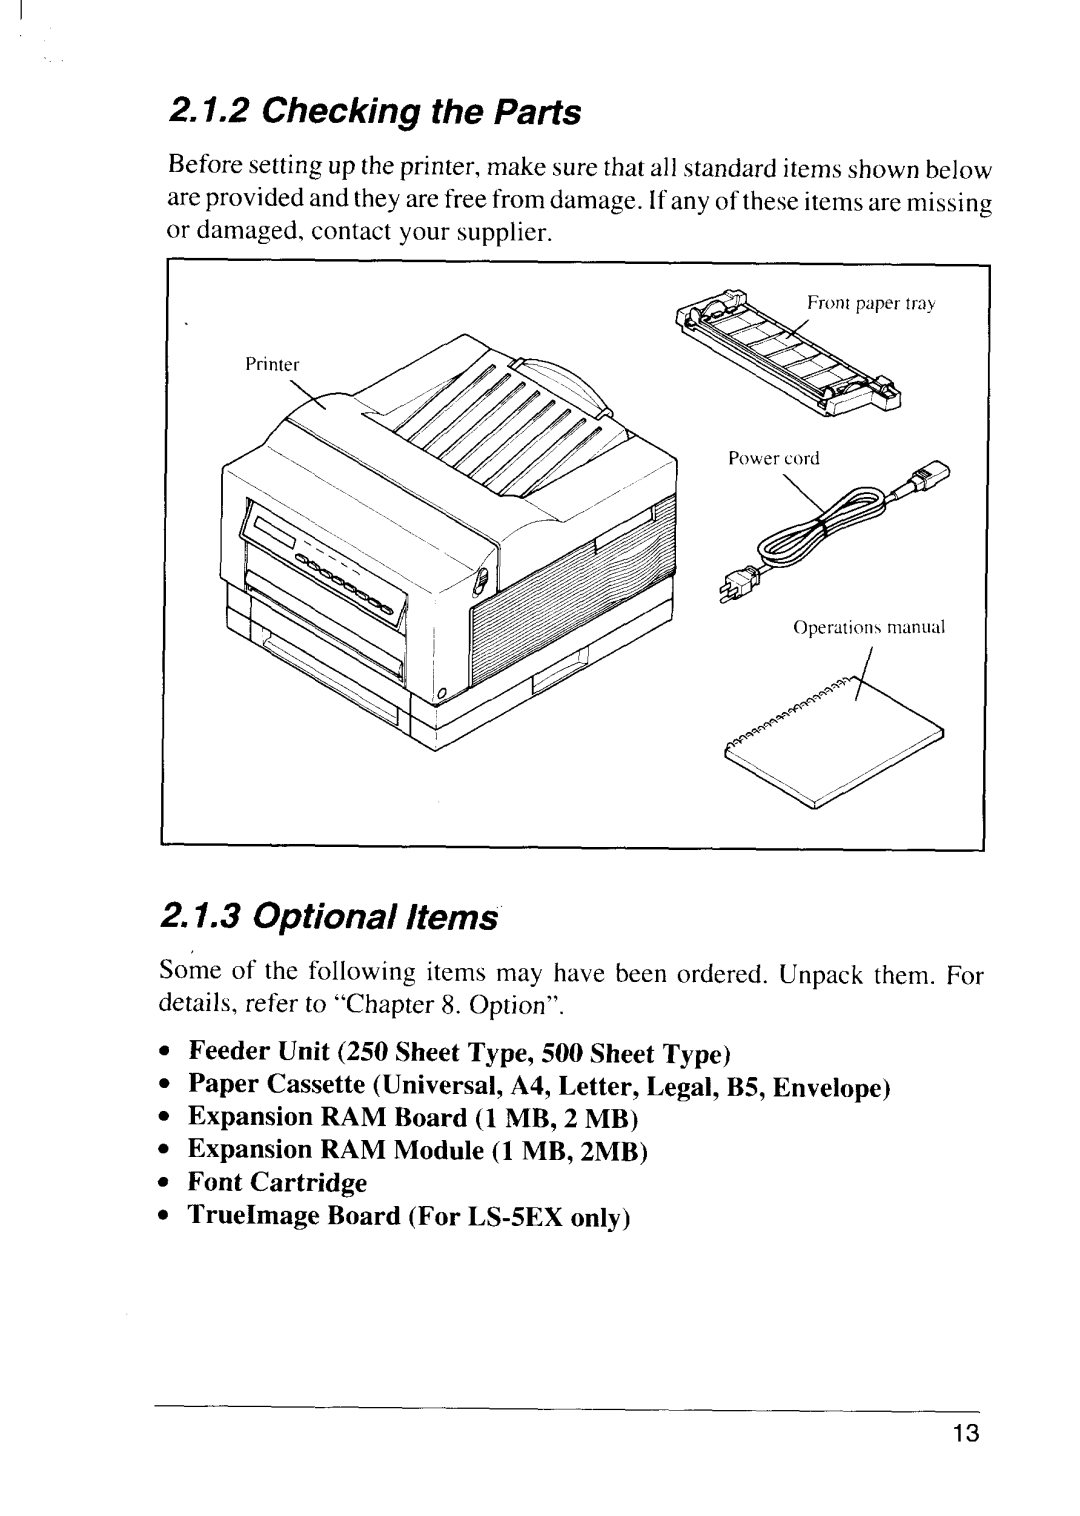 Star Micronics LS-5 TT, LS-5 EX operation manual Checking the Parts, I 2.1.3 Optional Items 